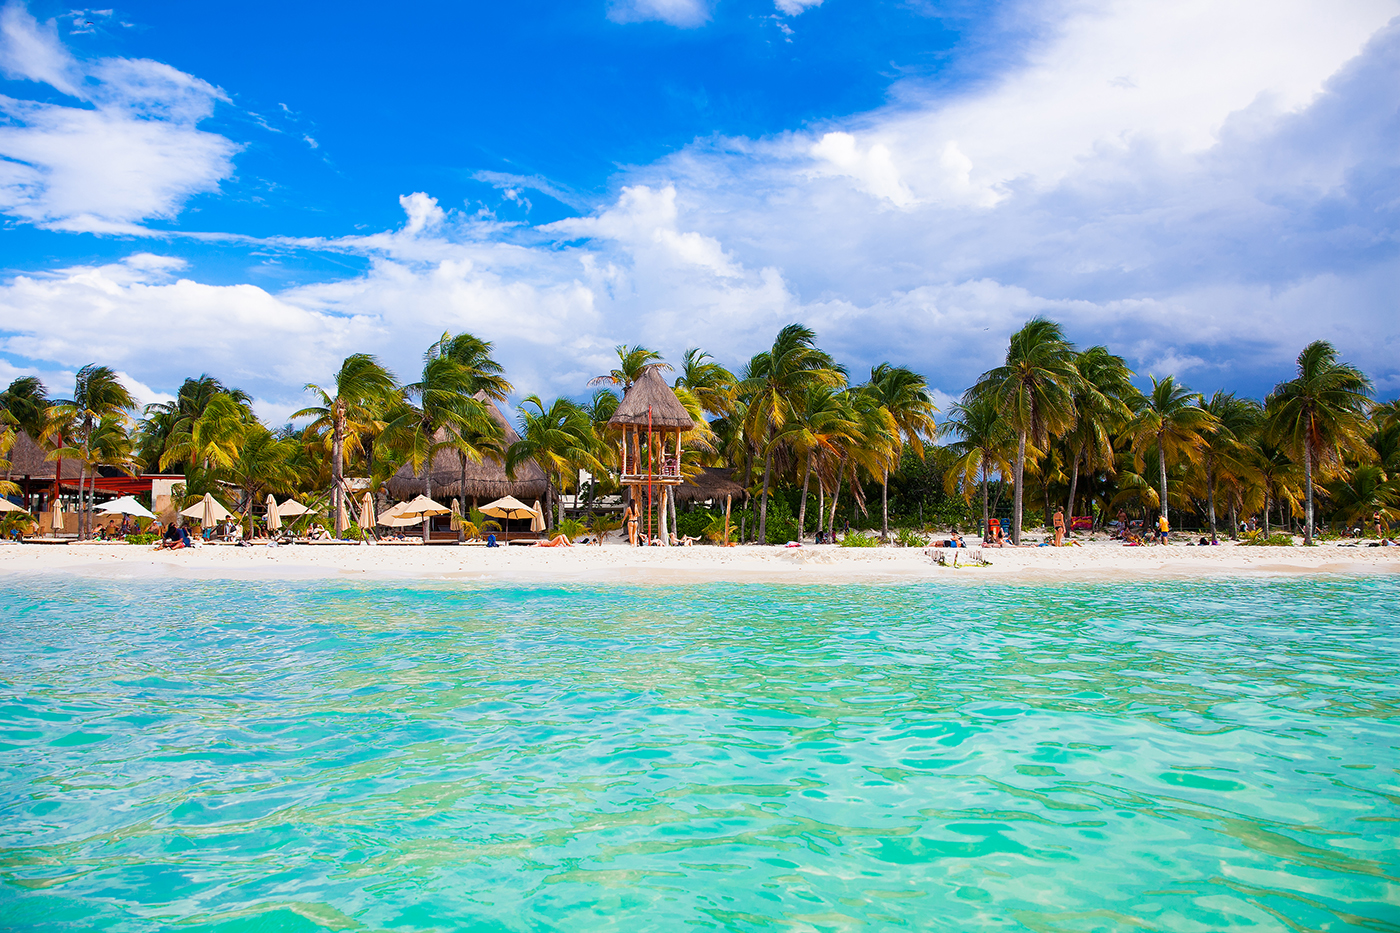 Norten beach on colorful Isla Mujeres island near Cancun in Mexico